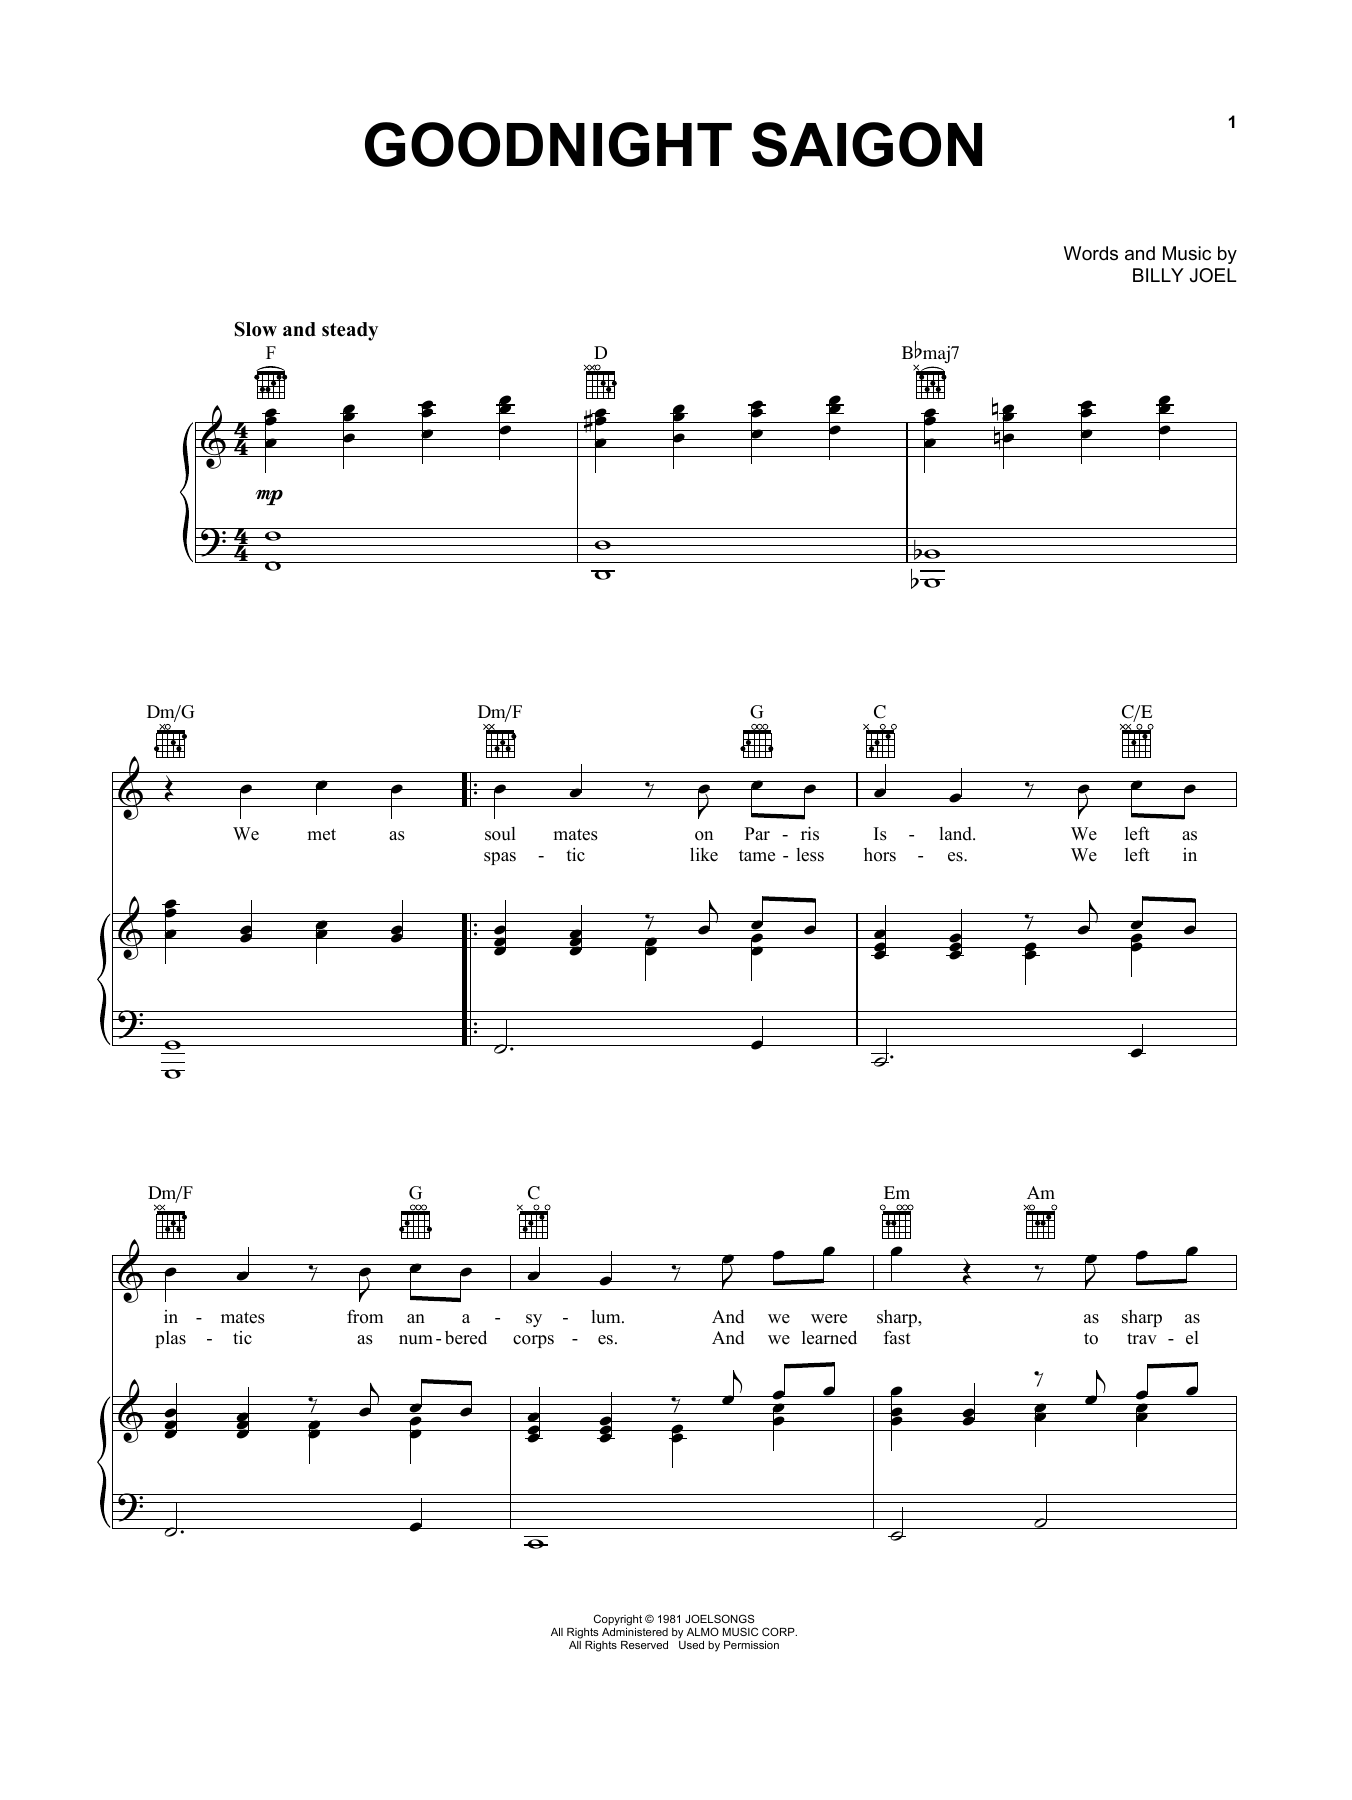 Billy Joel Goodnight Saigon Sheet Music Notes & Chords for Keyboard Transcription - Download or Print PDF